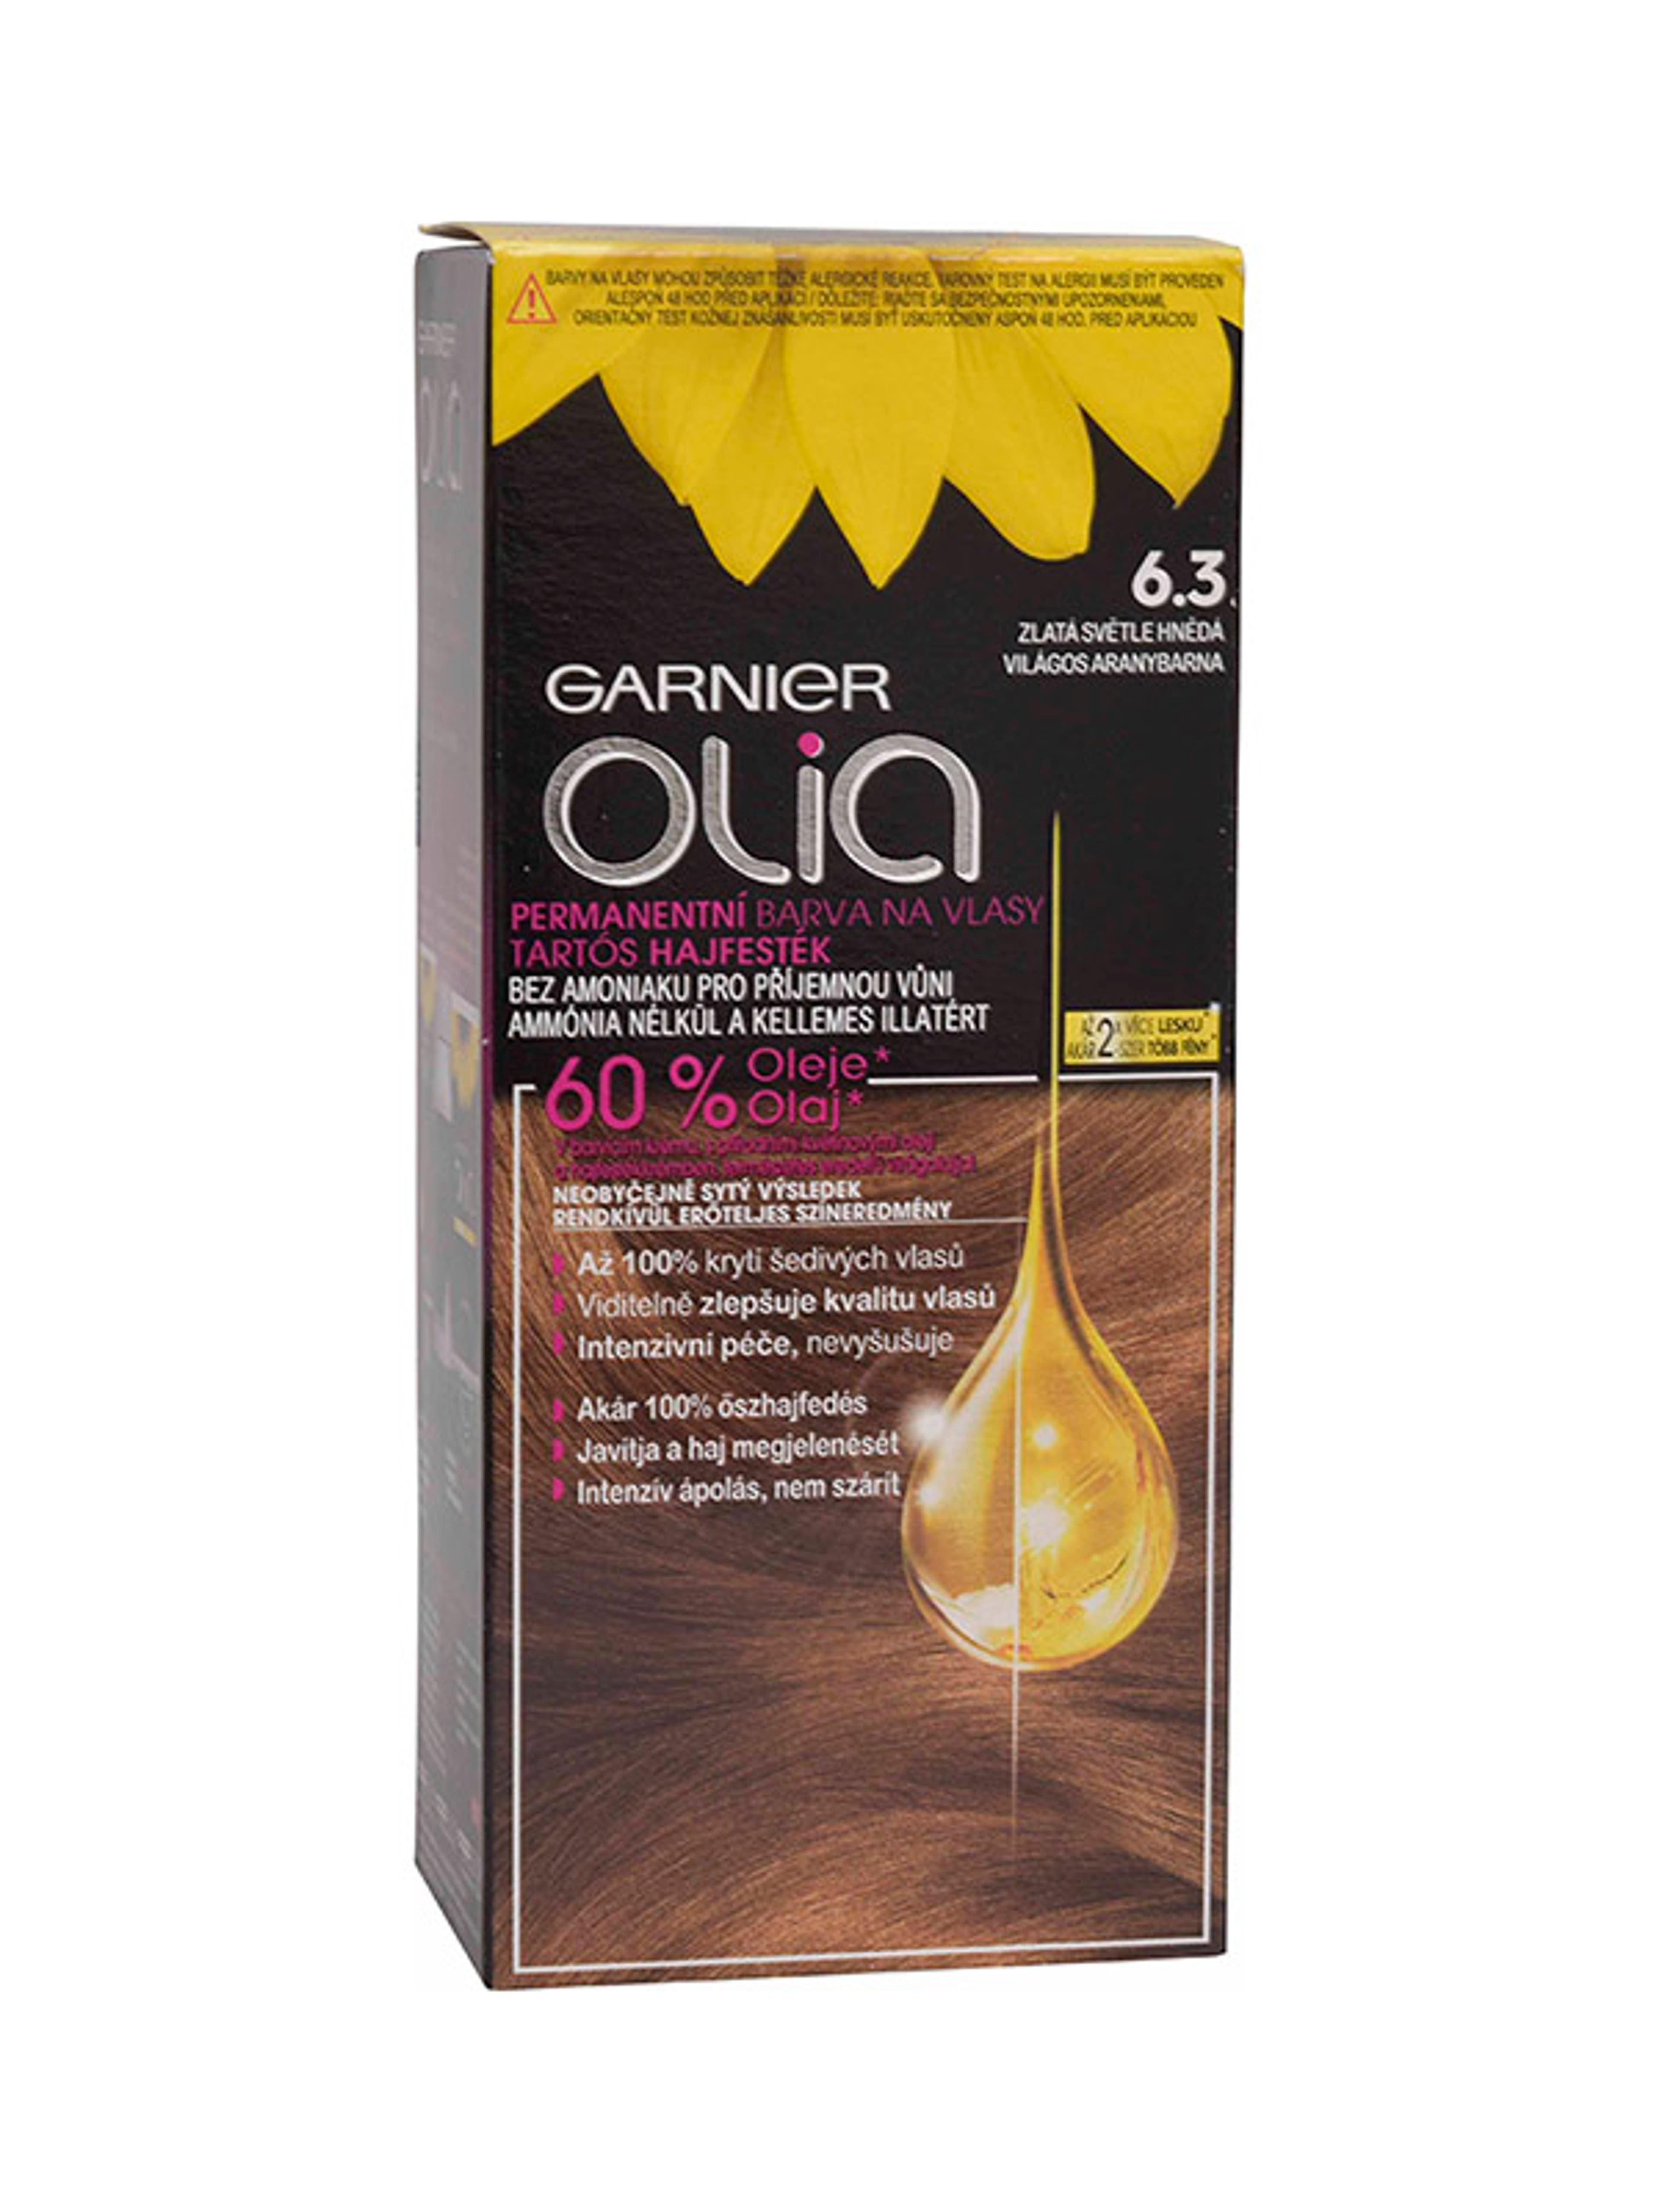 Garnier Olia tartós hajfesték 6.3 Világos aranybarna - 1 db-1